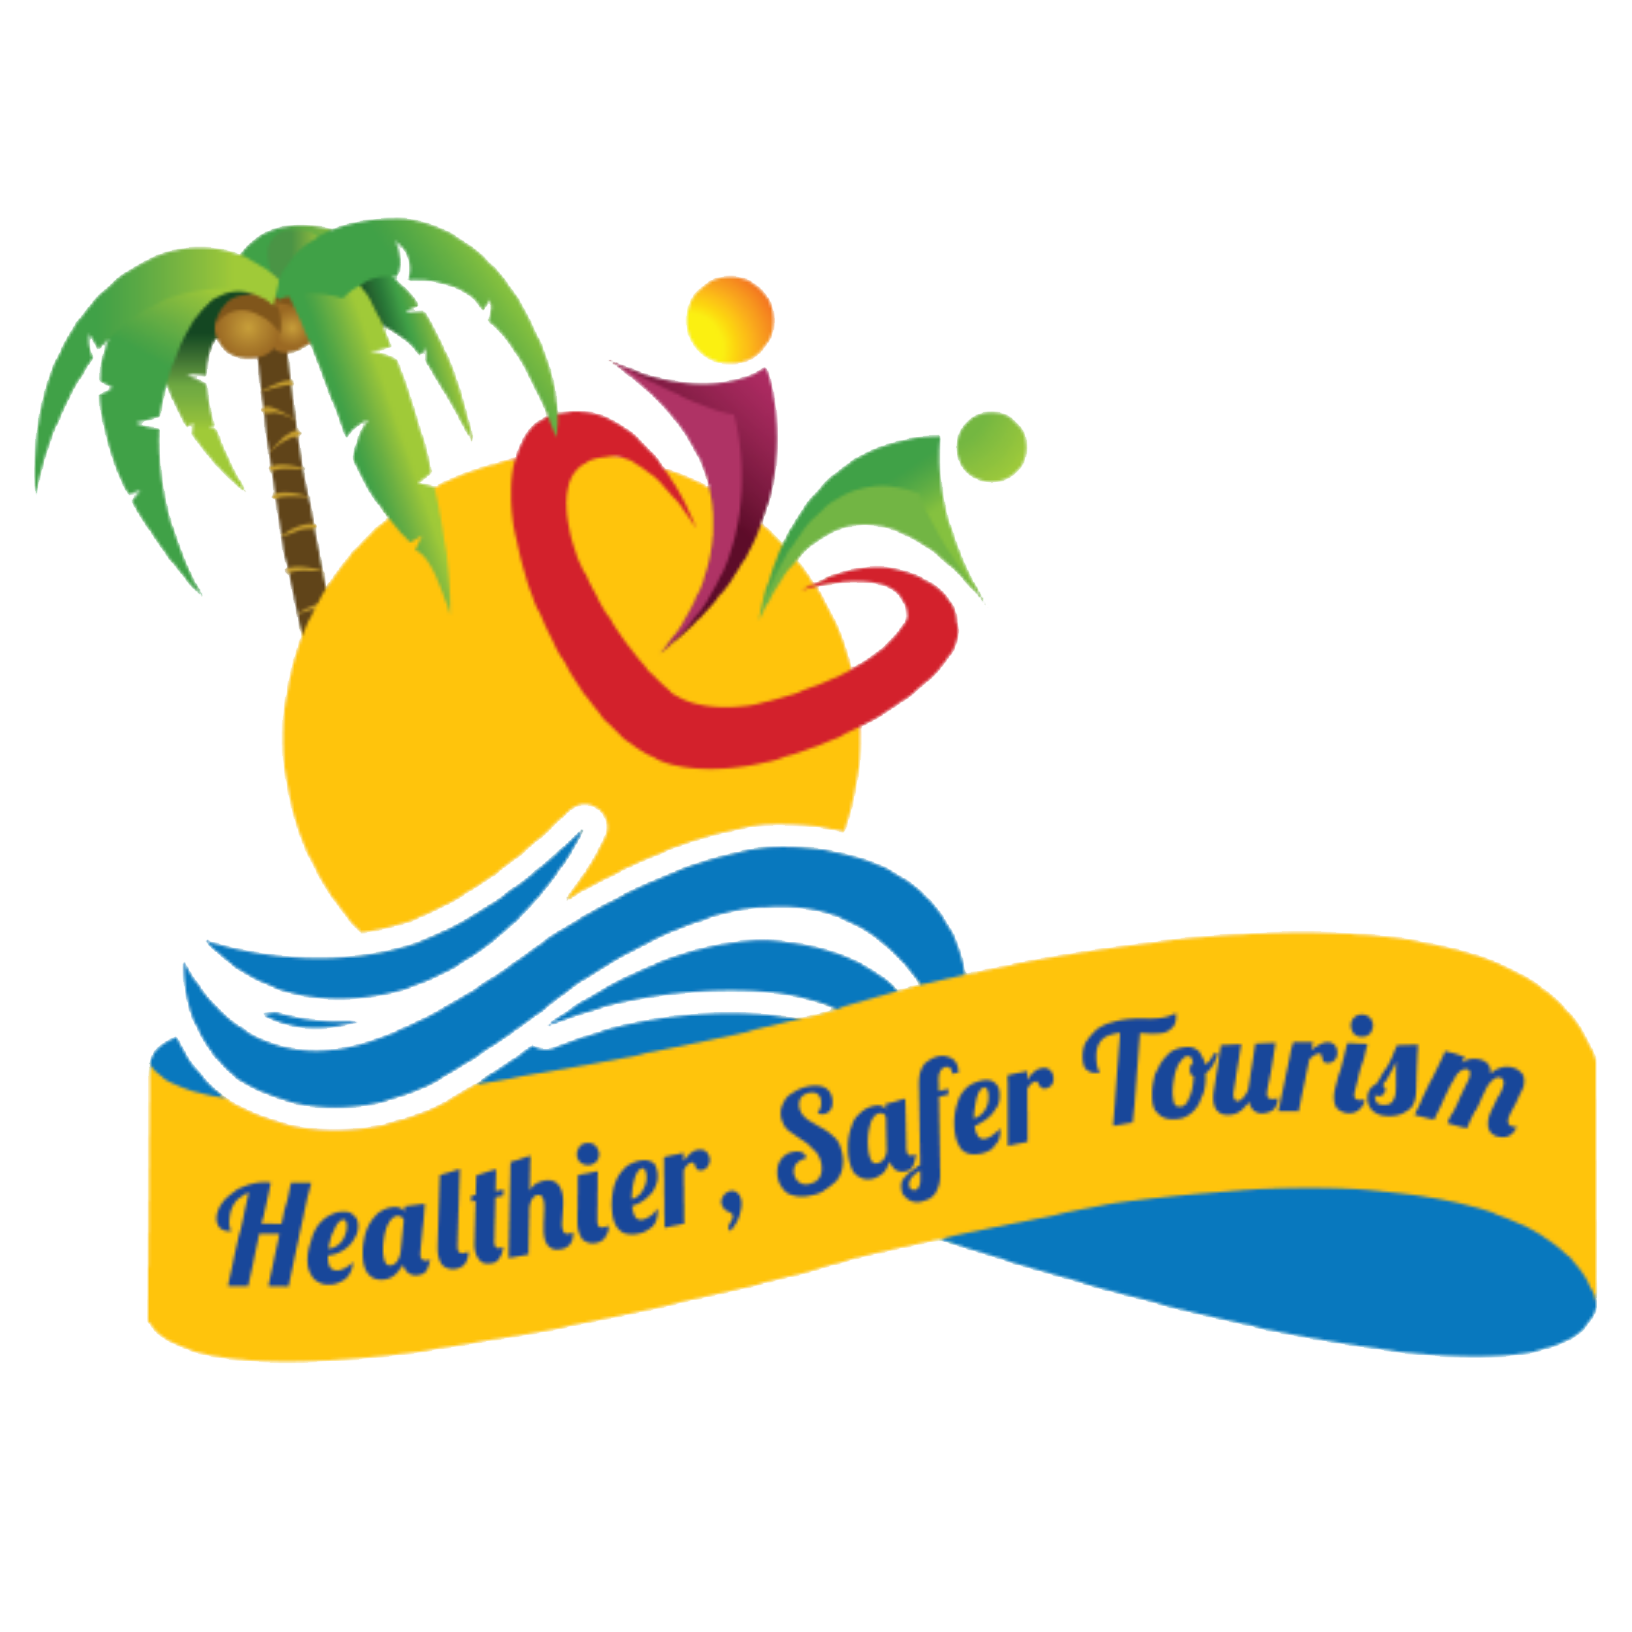 healthier safer tourism bahamas